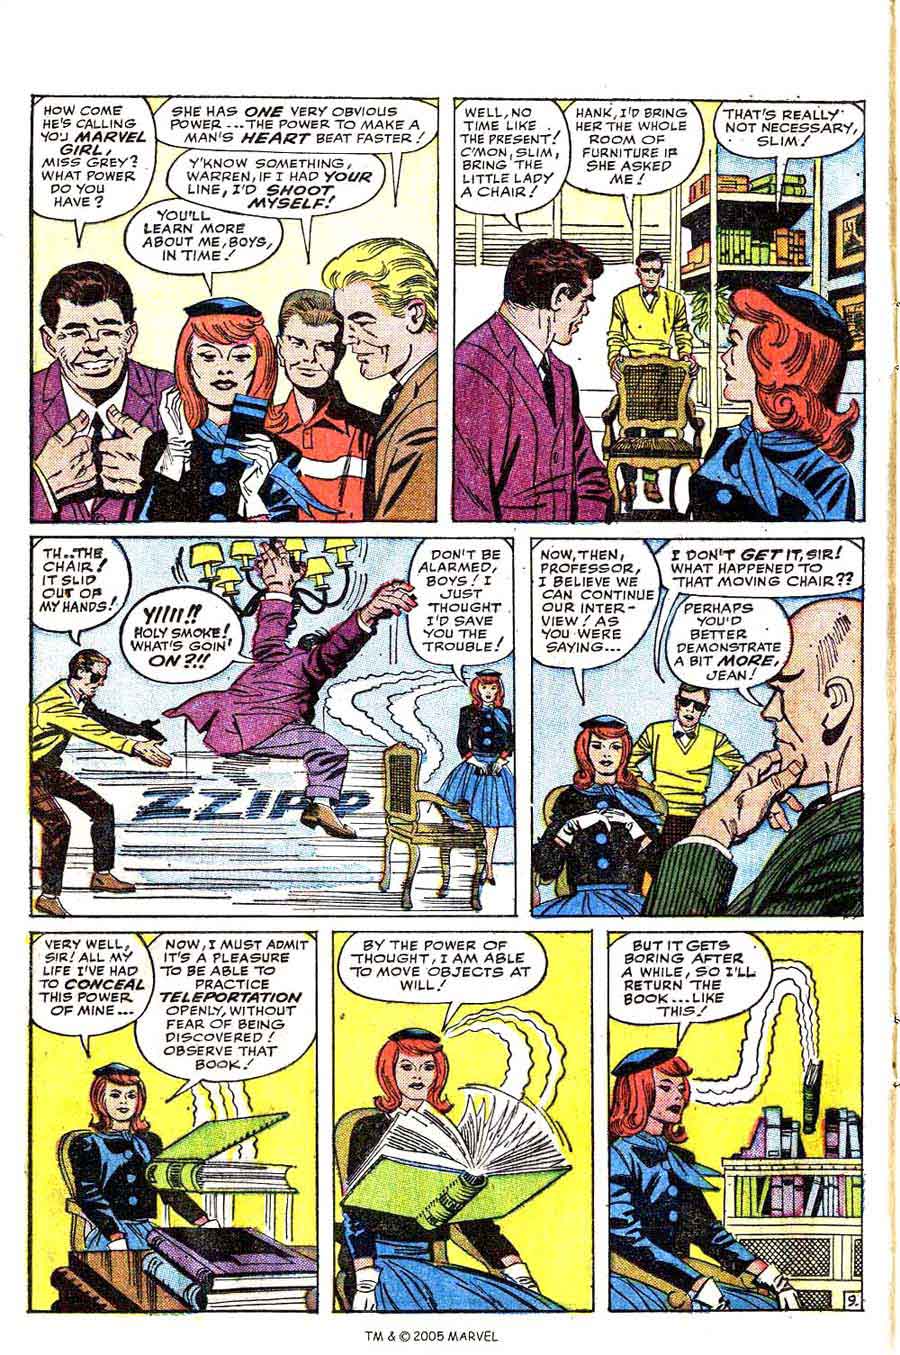 X-men v1 #1 1963 marvel comic book page art by Jack Kirby